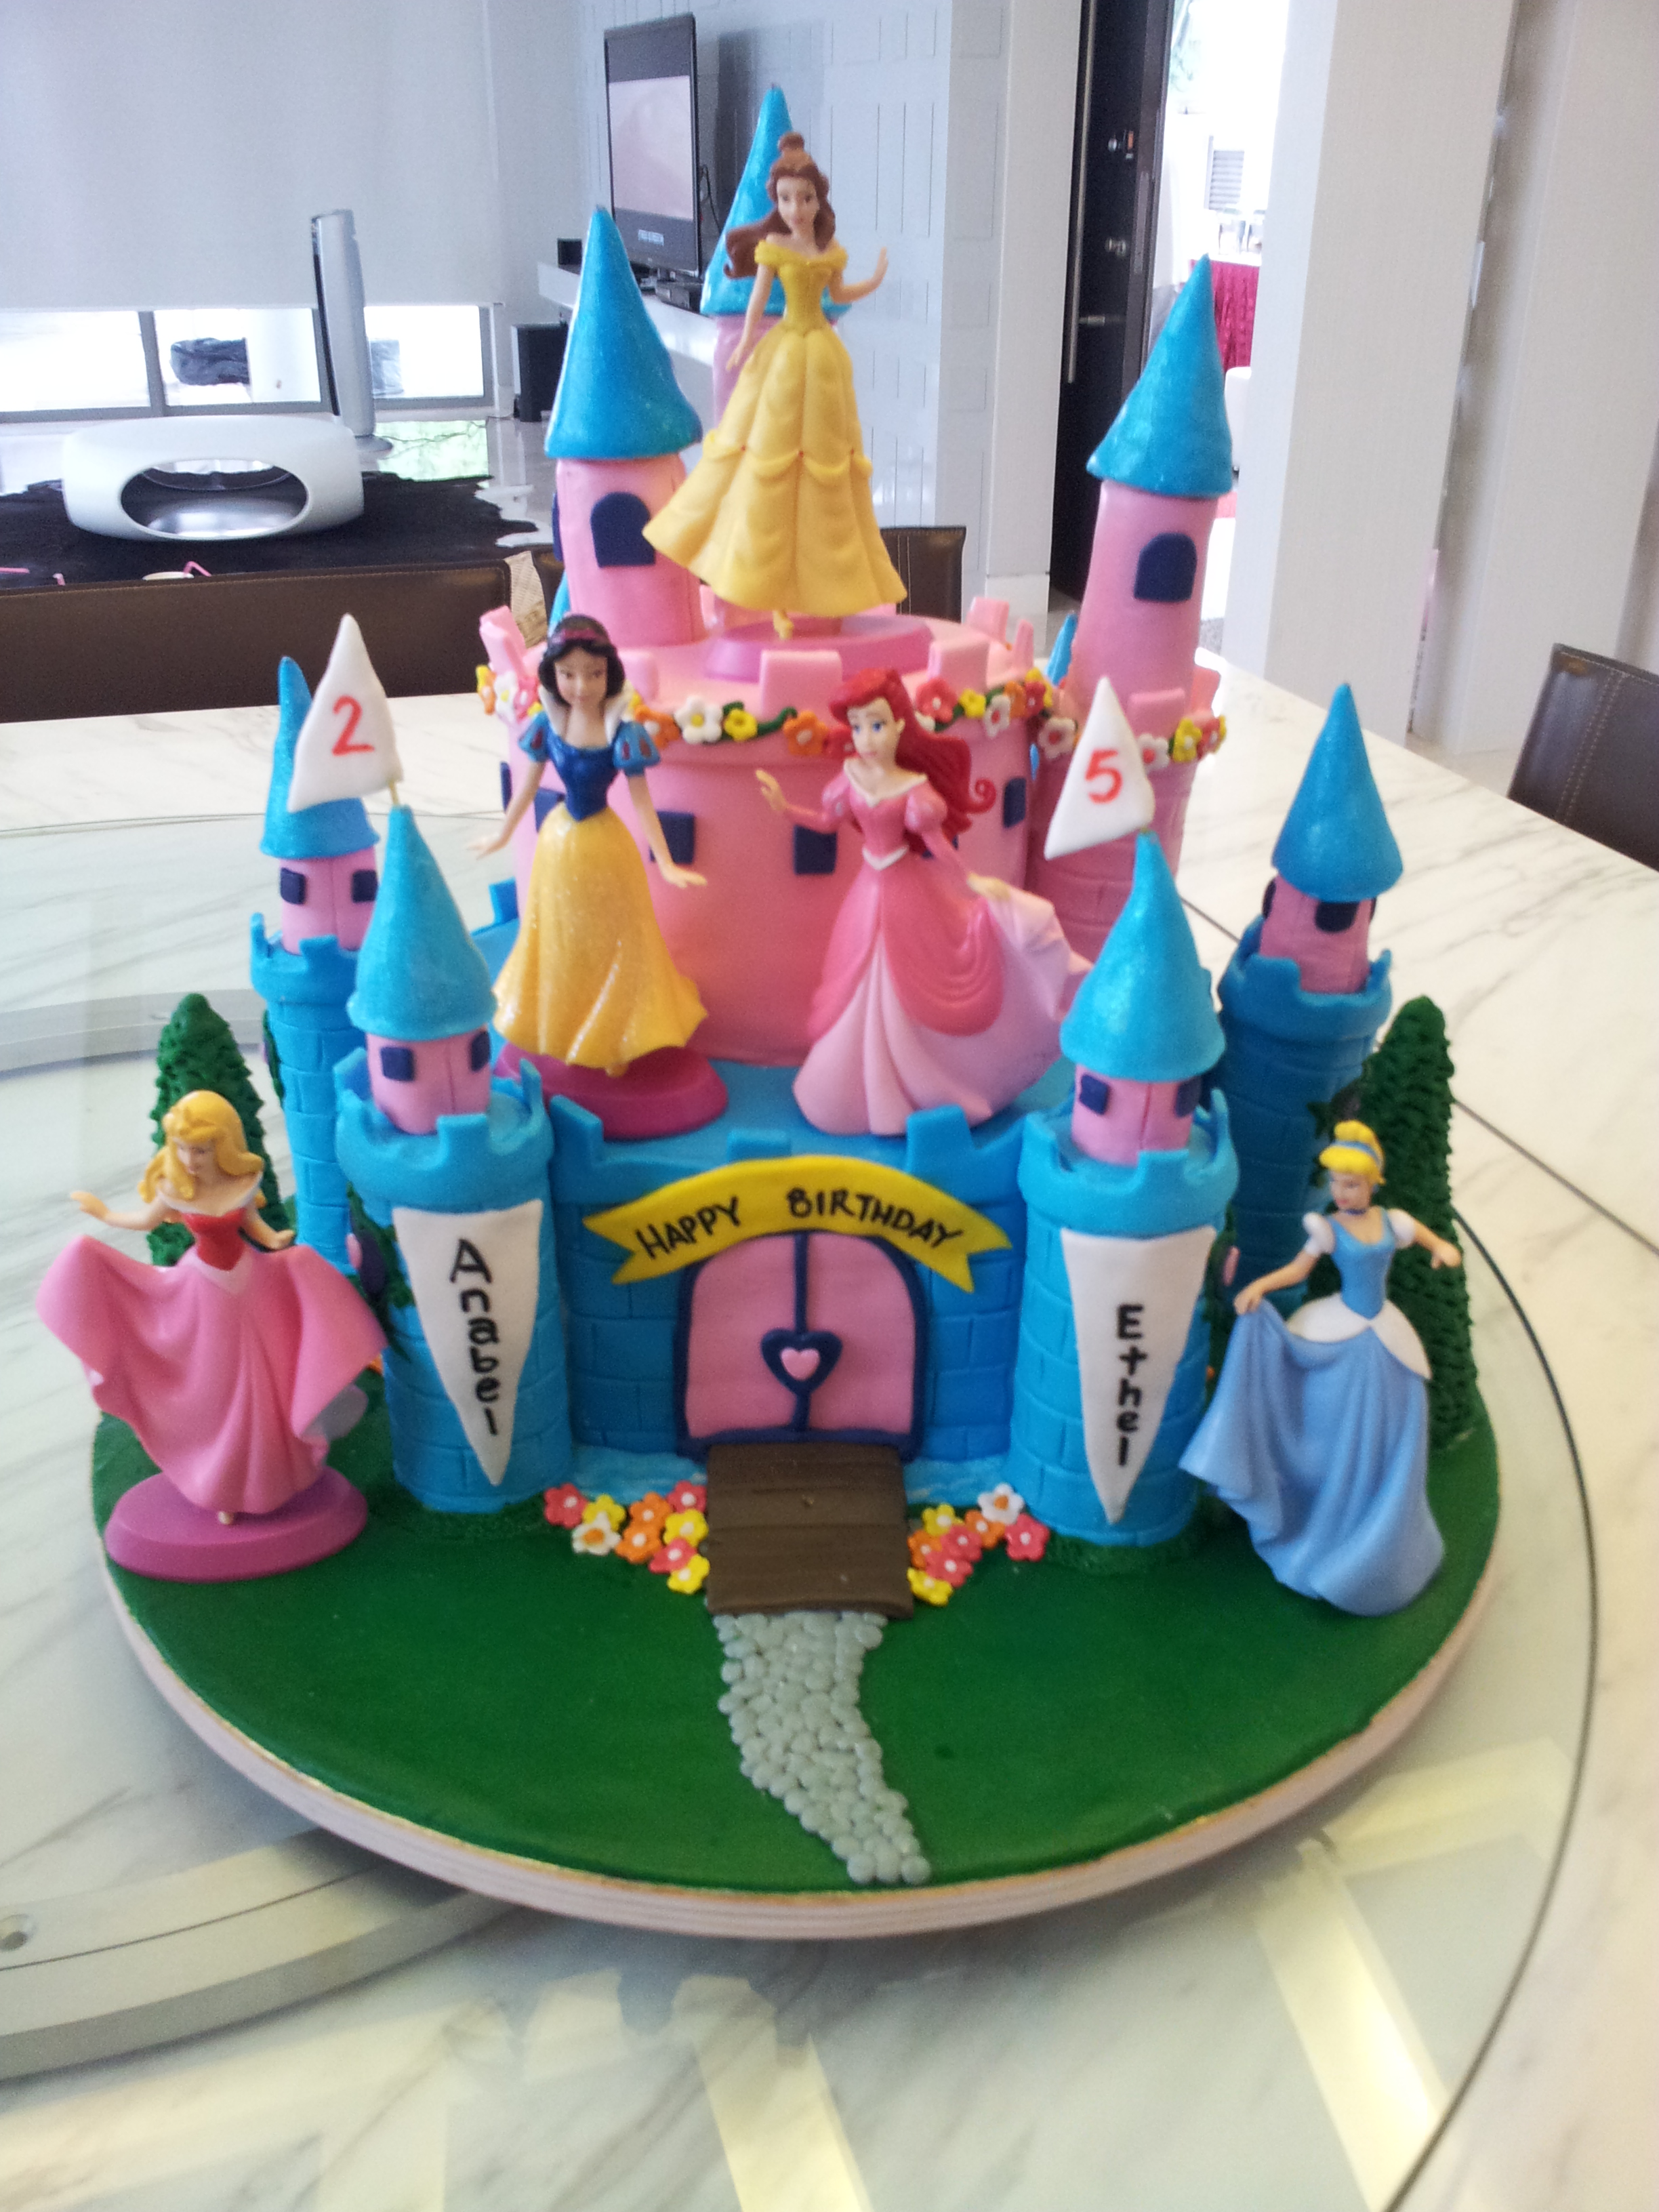 5 Year Old Girl Birthday Cake - A Birthday Cake